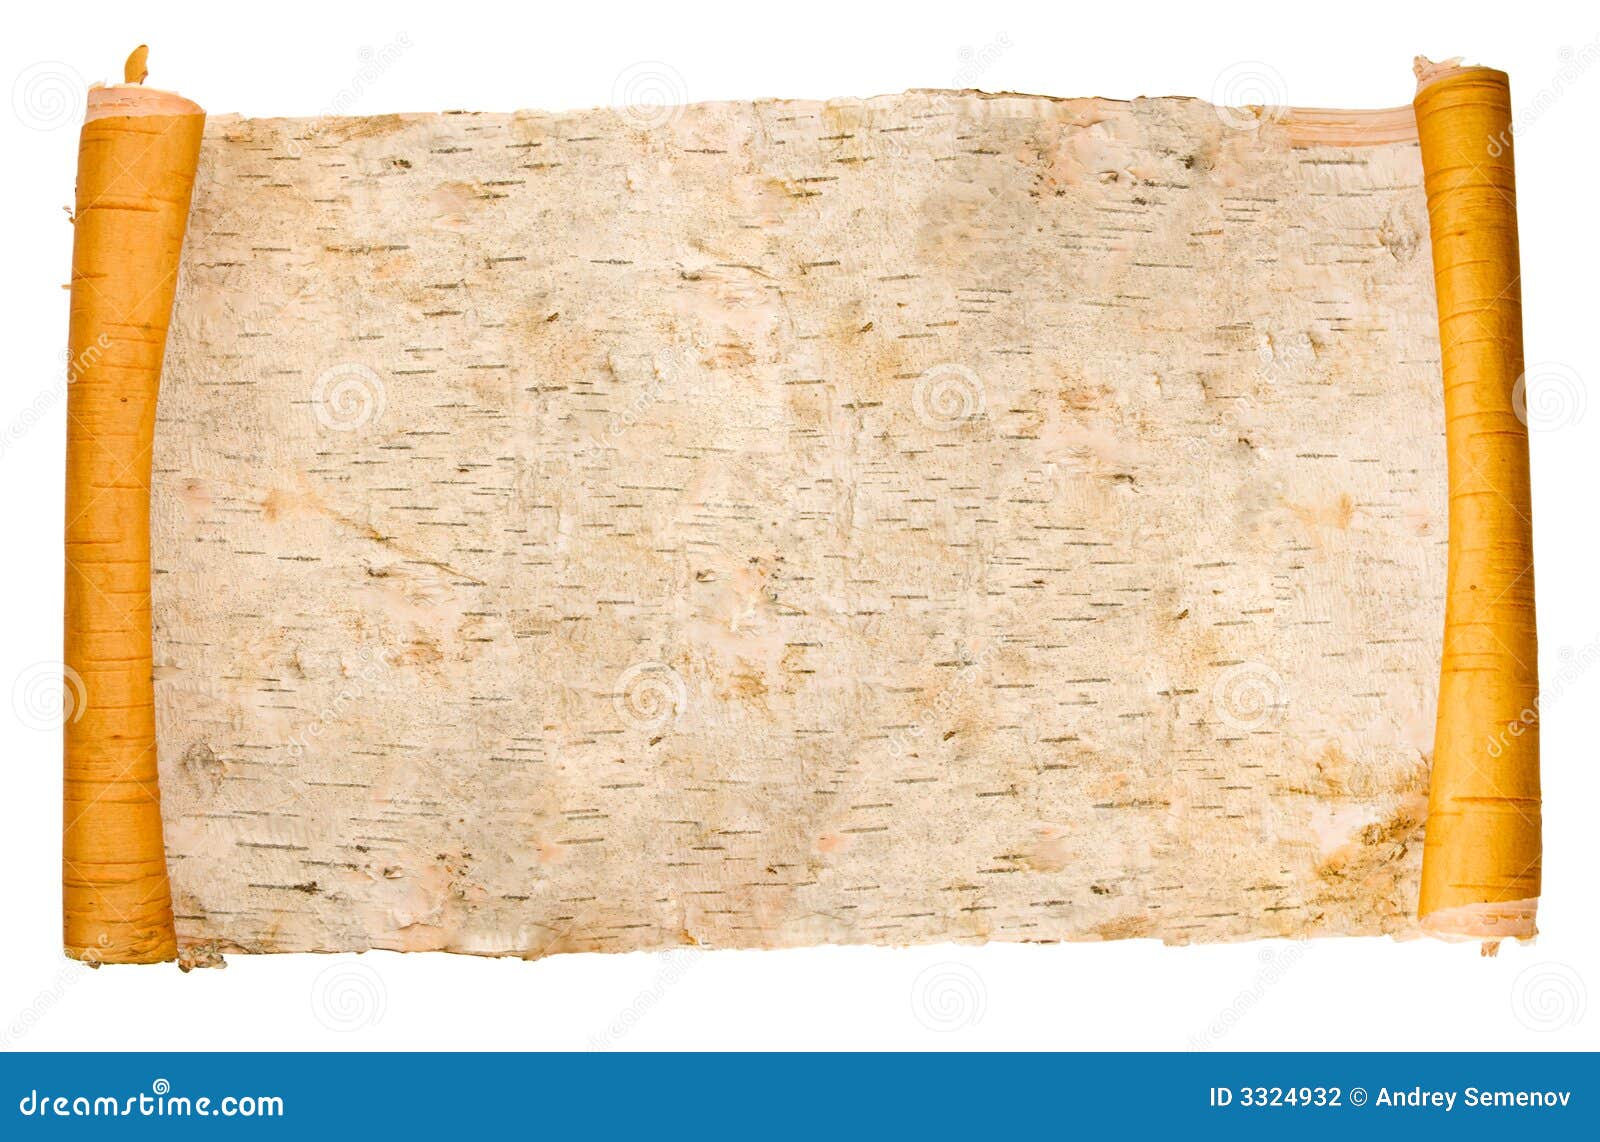 expanded birchen bark scroll